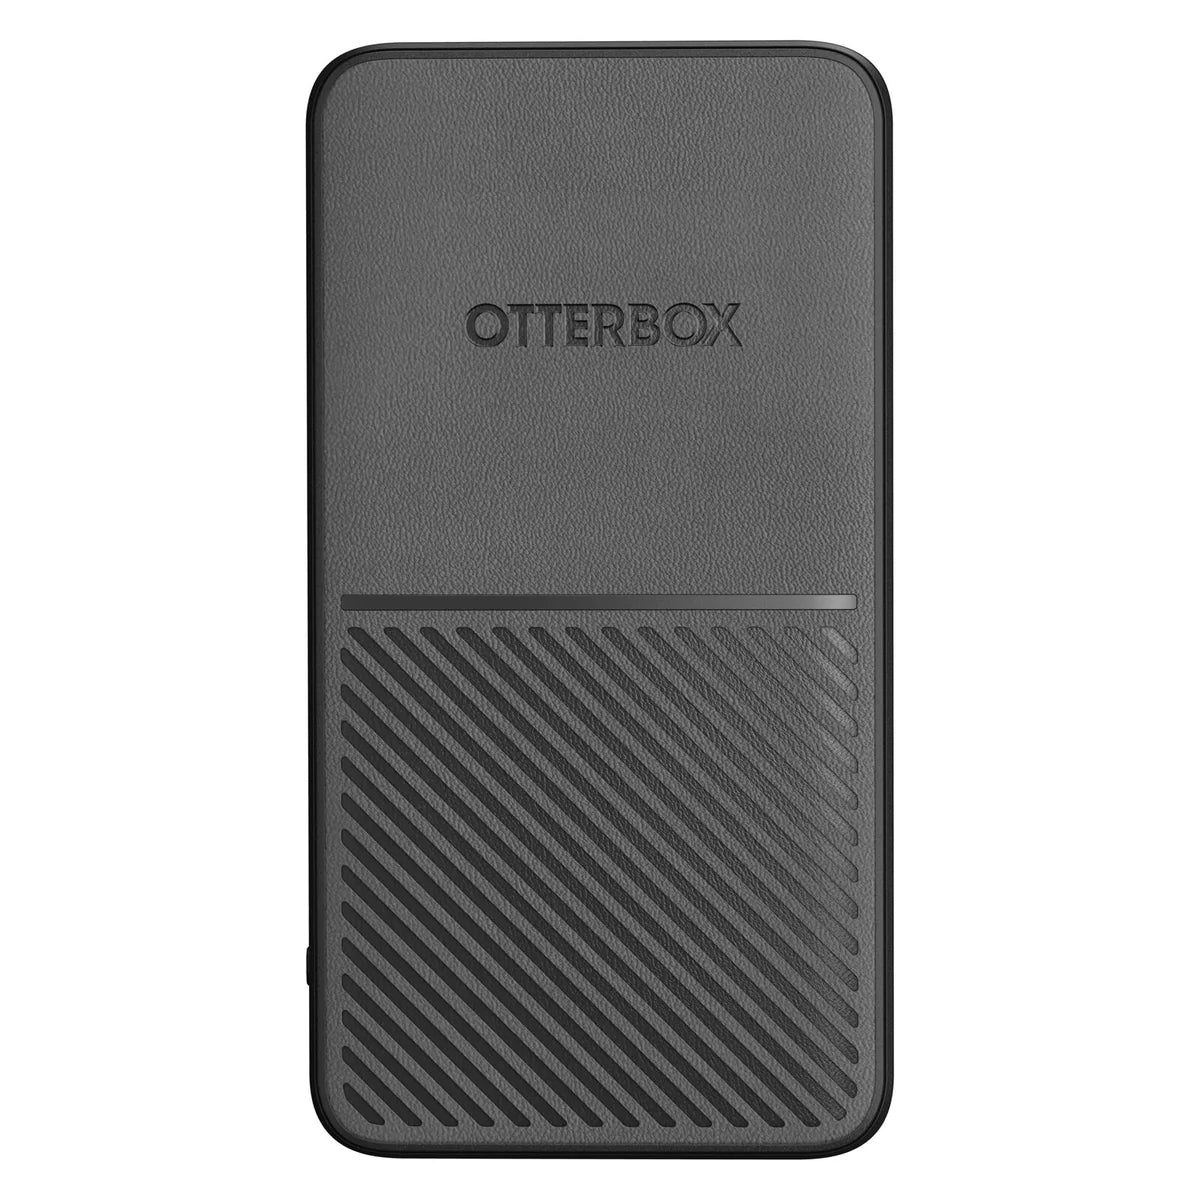 OtterBox Portable 5000mah Dual USB (USB-A and USB-C) Power Bank